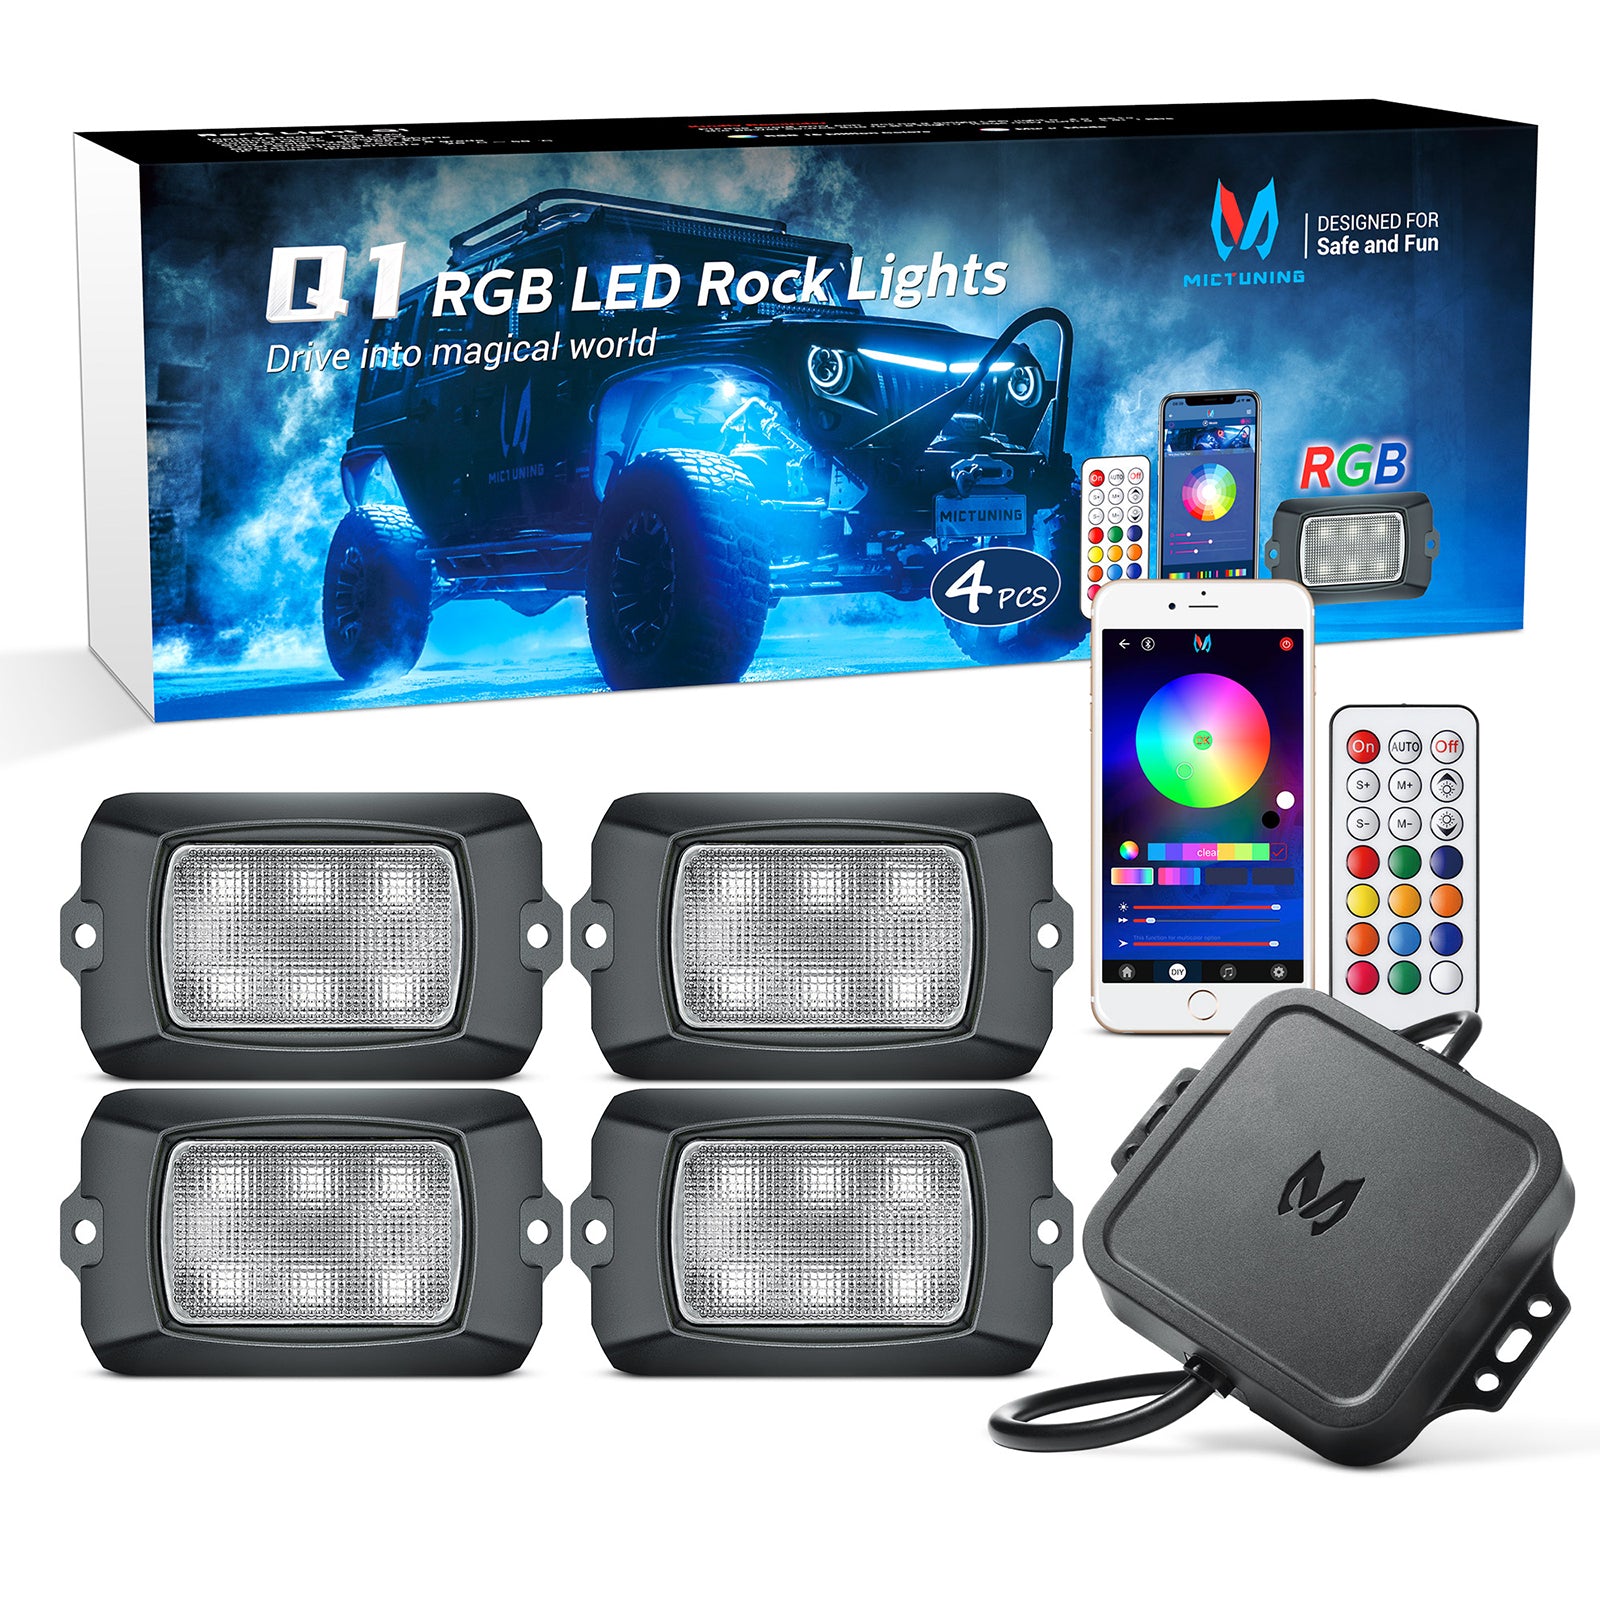 Q1 RGB LED Rock Lights - 4 Pods Multicolor Underglow Neon Light